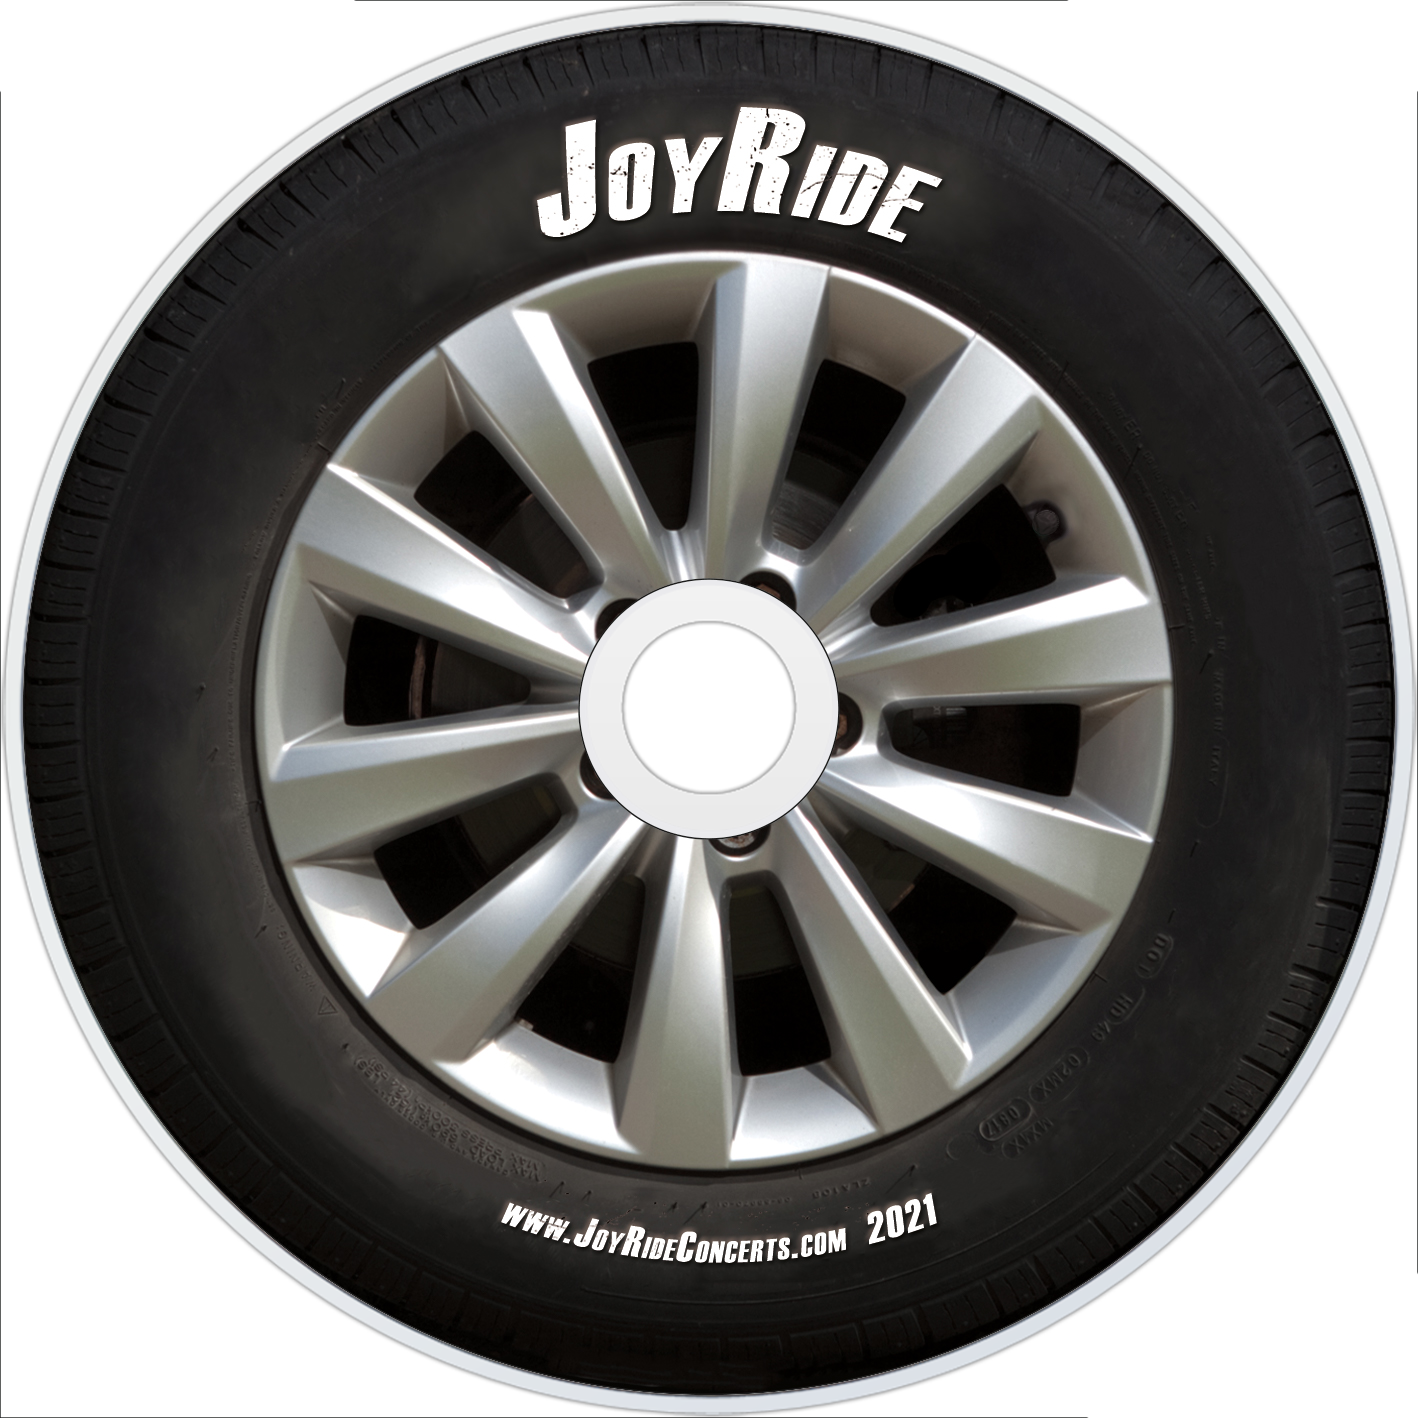 JoyRide disc art 2.png